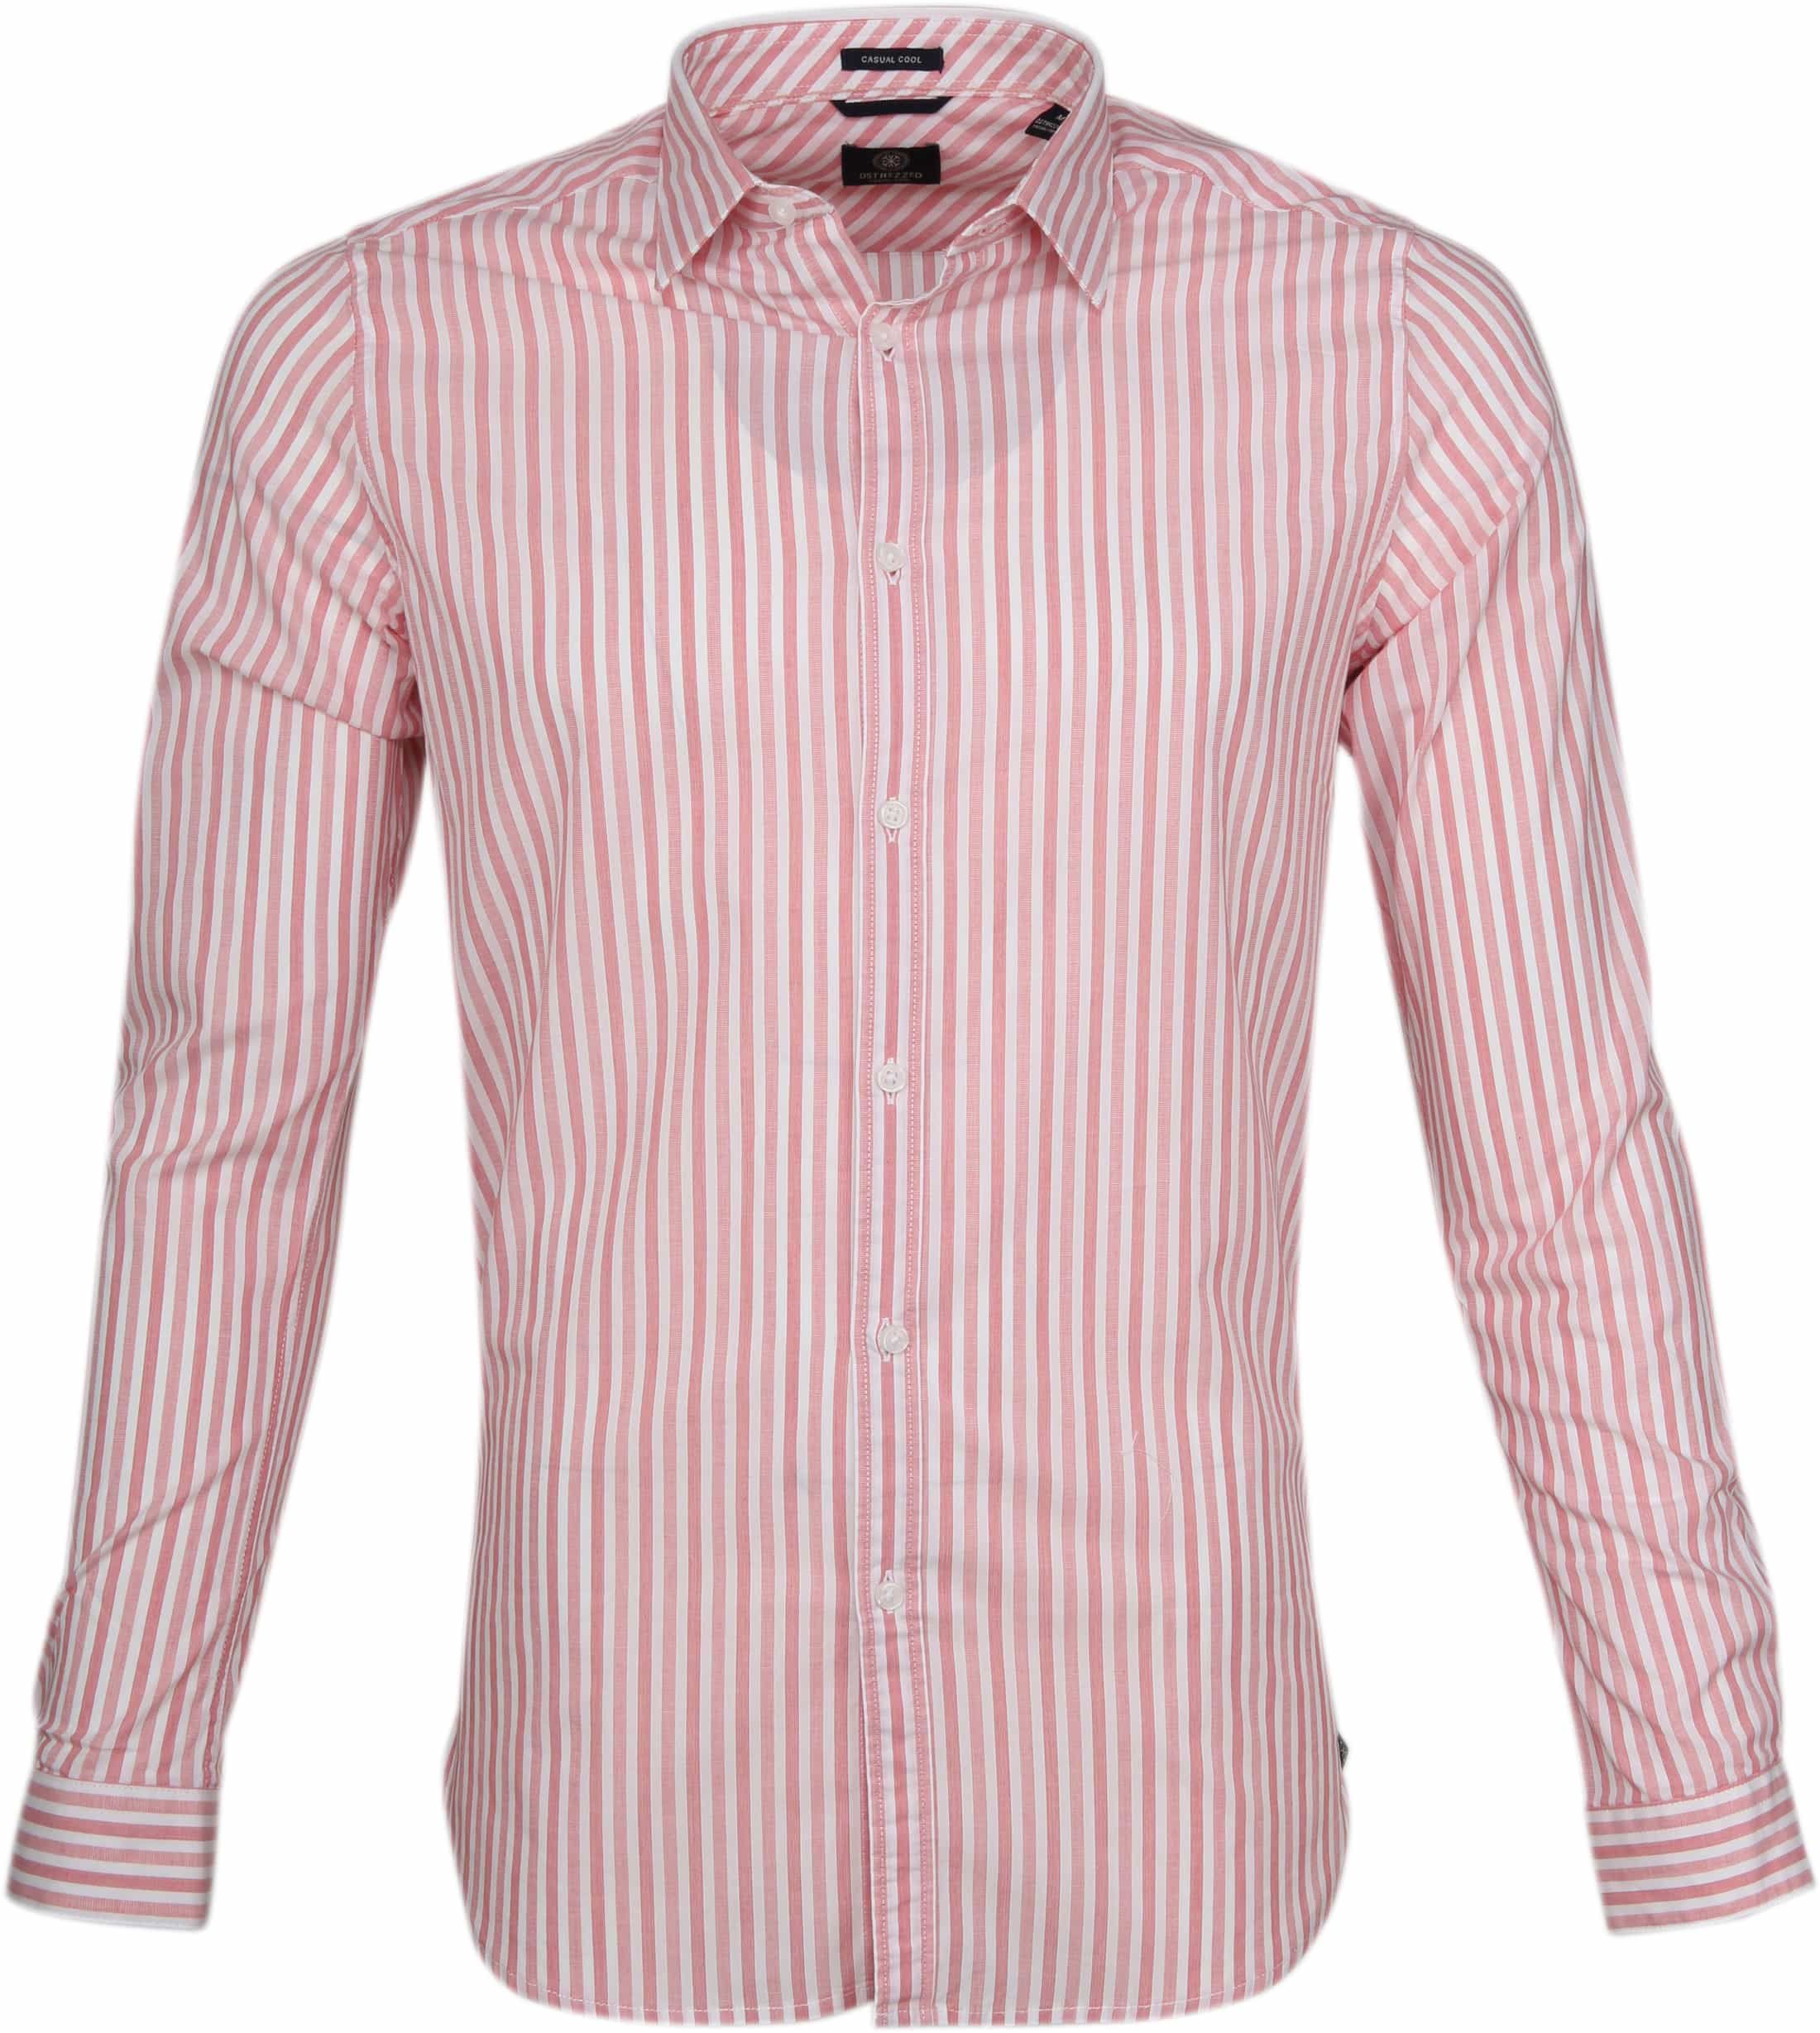 Dstrezzed Shirt Stripes Pink size XL